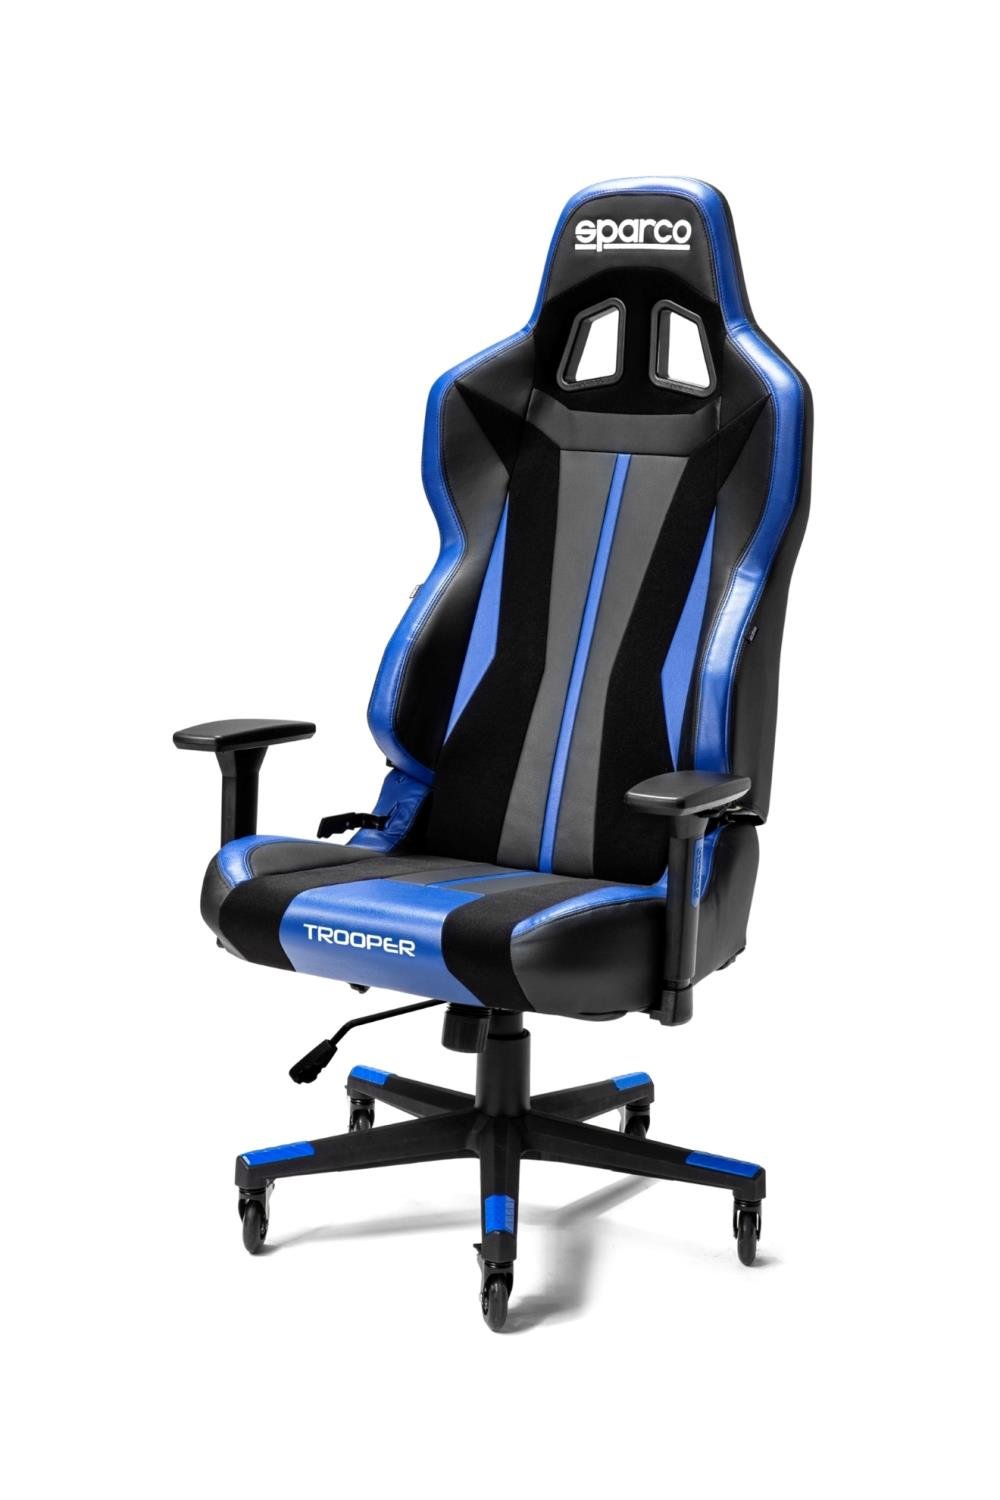 Sparco Trooper Series Gaming Chair